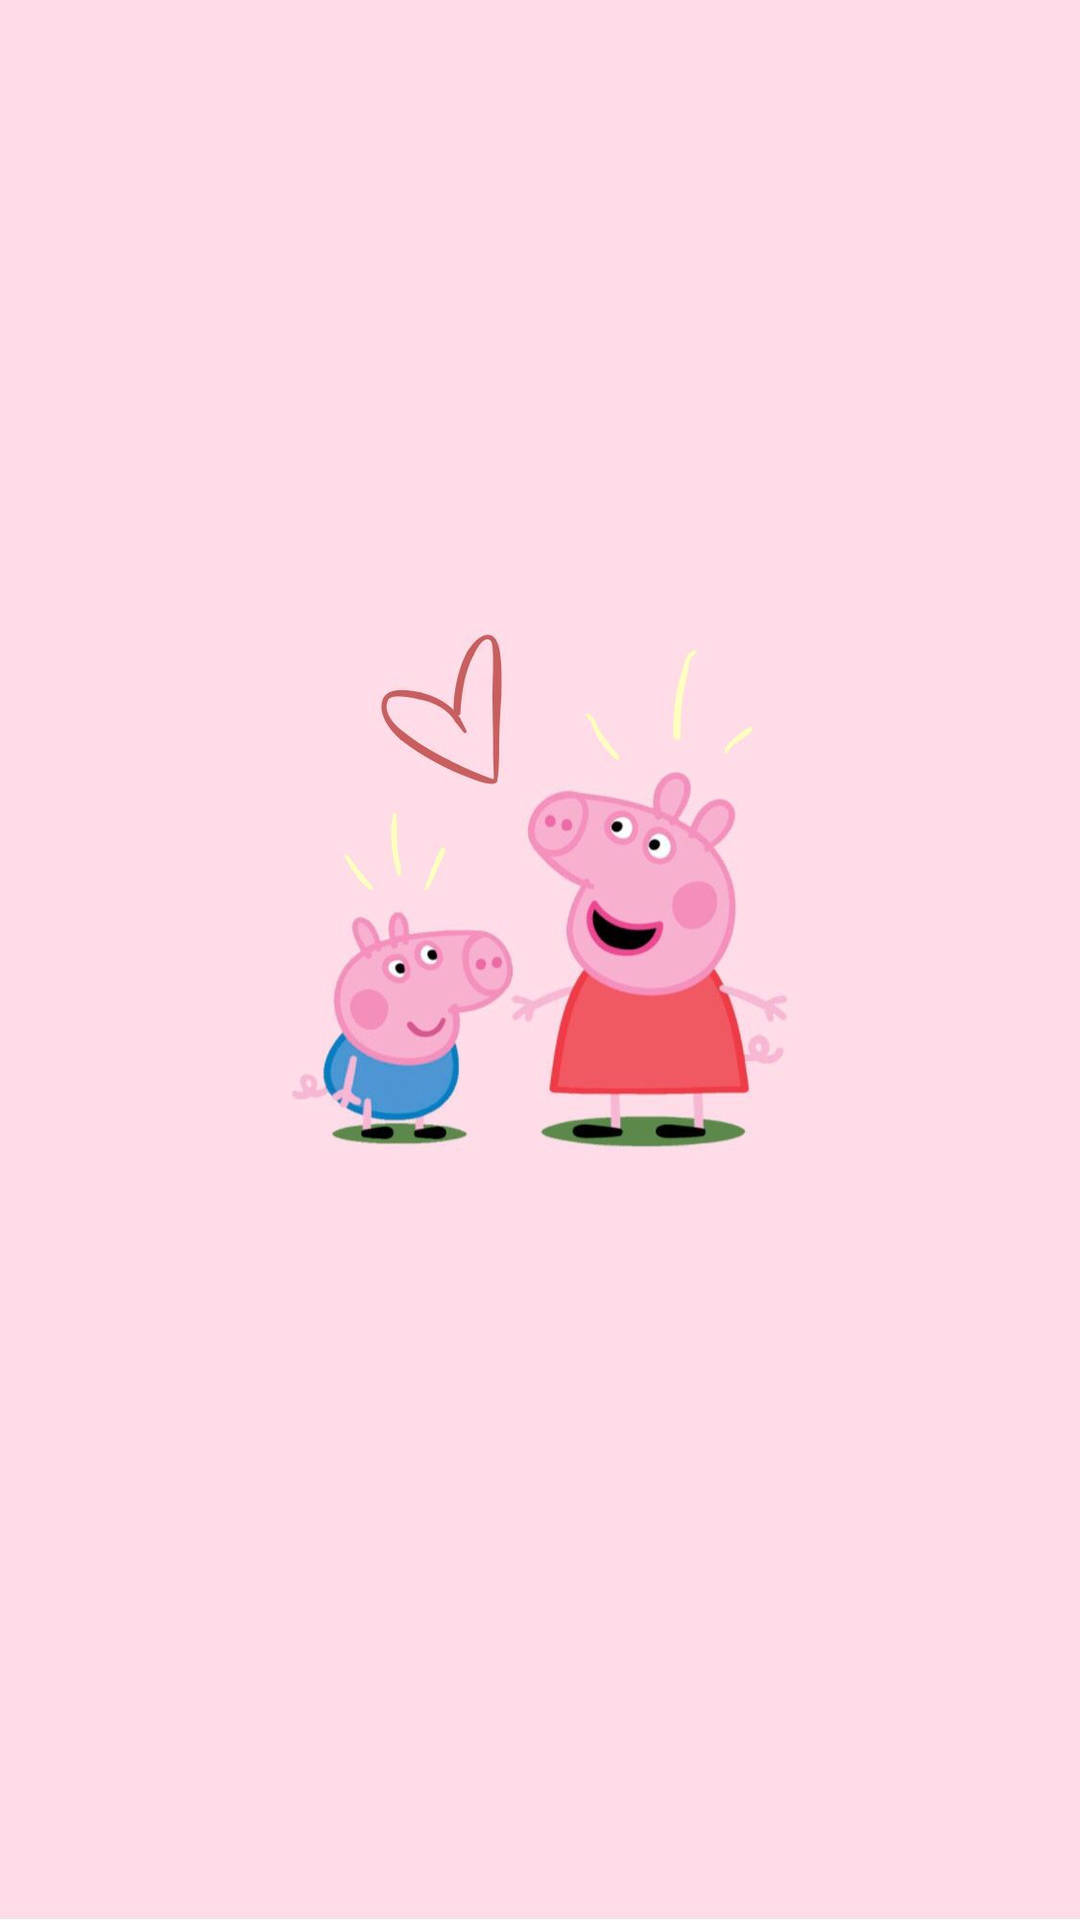 Minimalist George And Peppa Pig Wallpaper